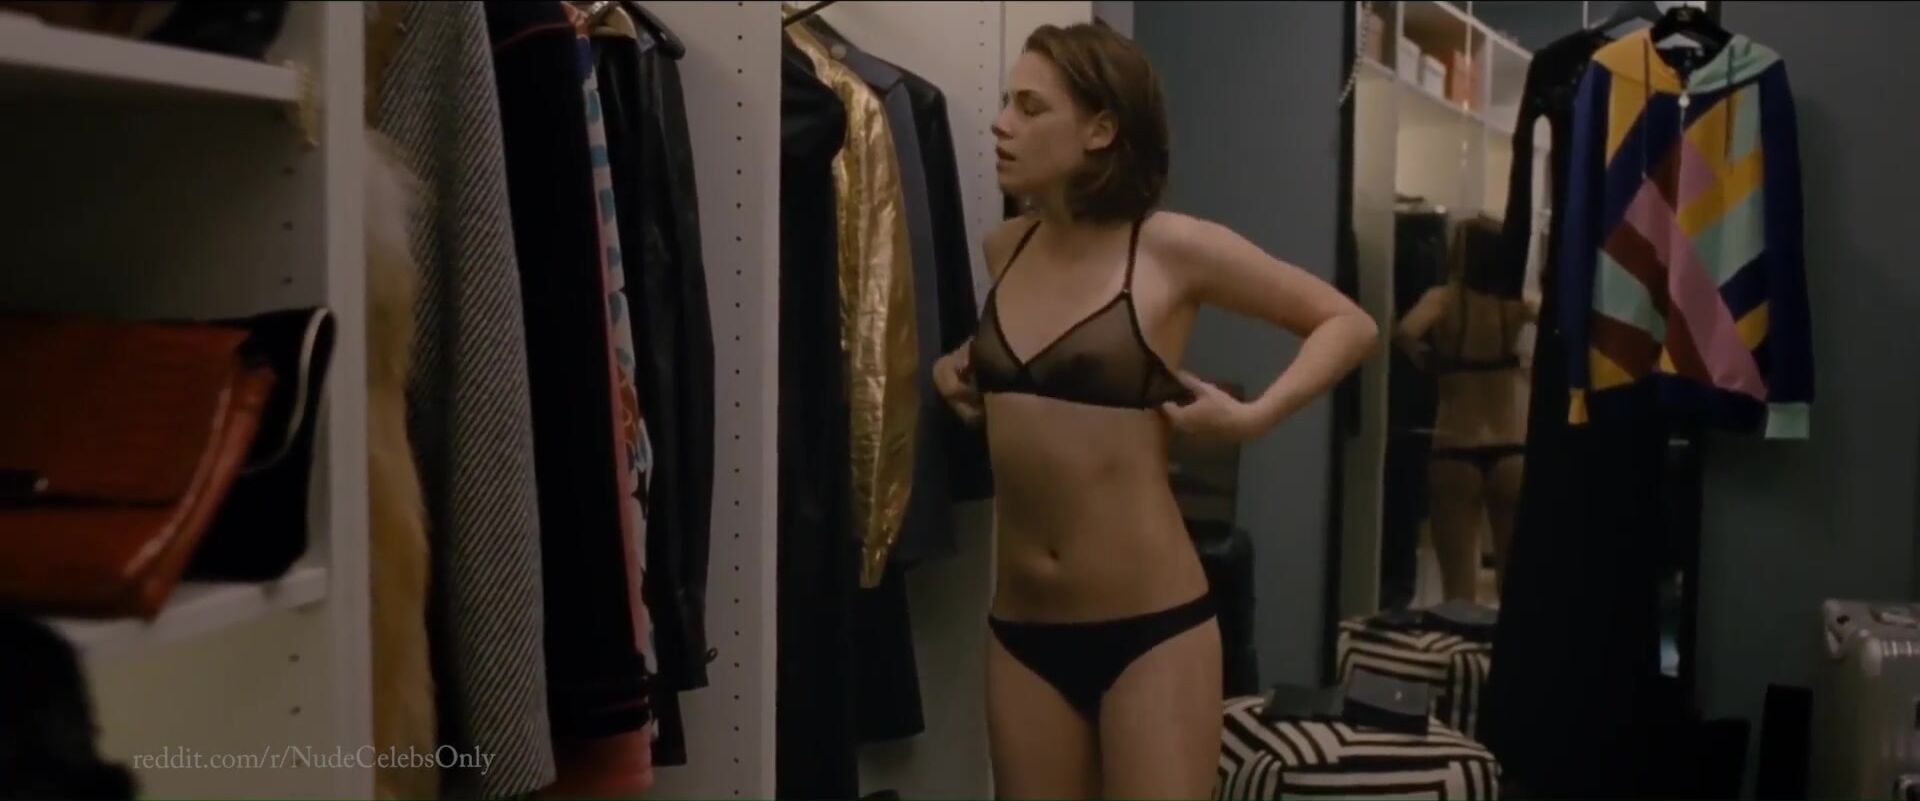 CzechGAV Celebs video HD compilation of hot movie star Kristen Stewart starring in the nude Slim